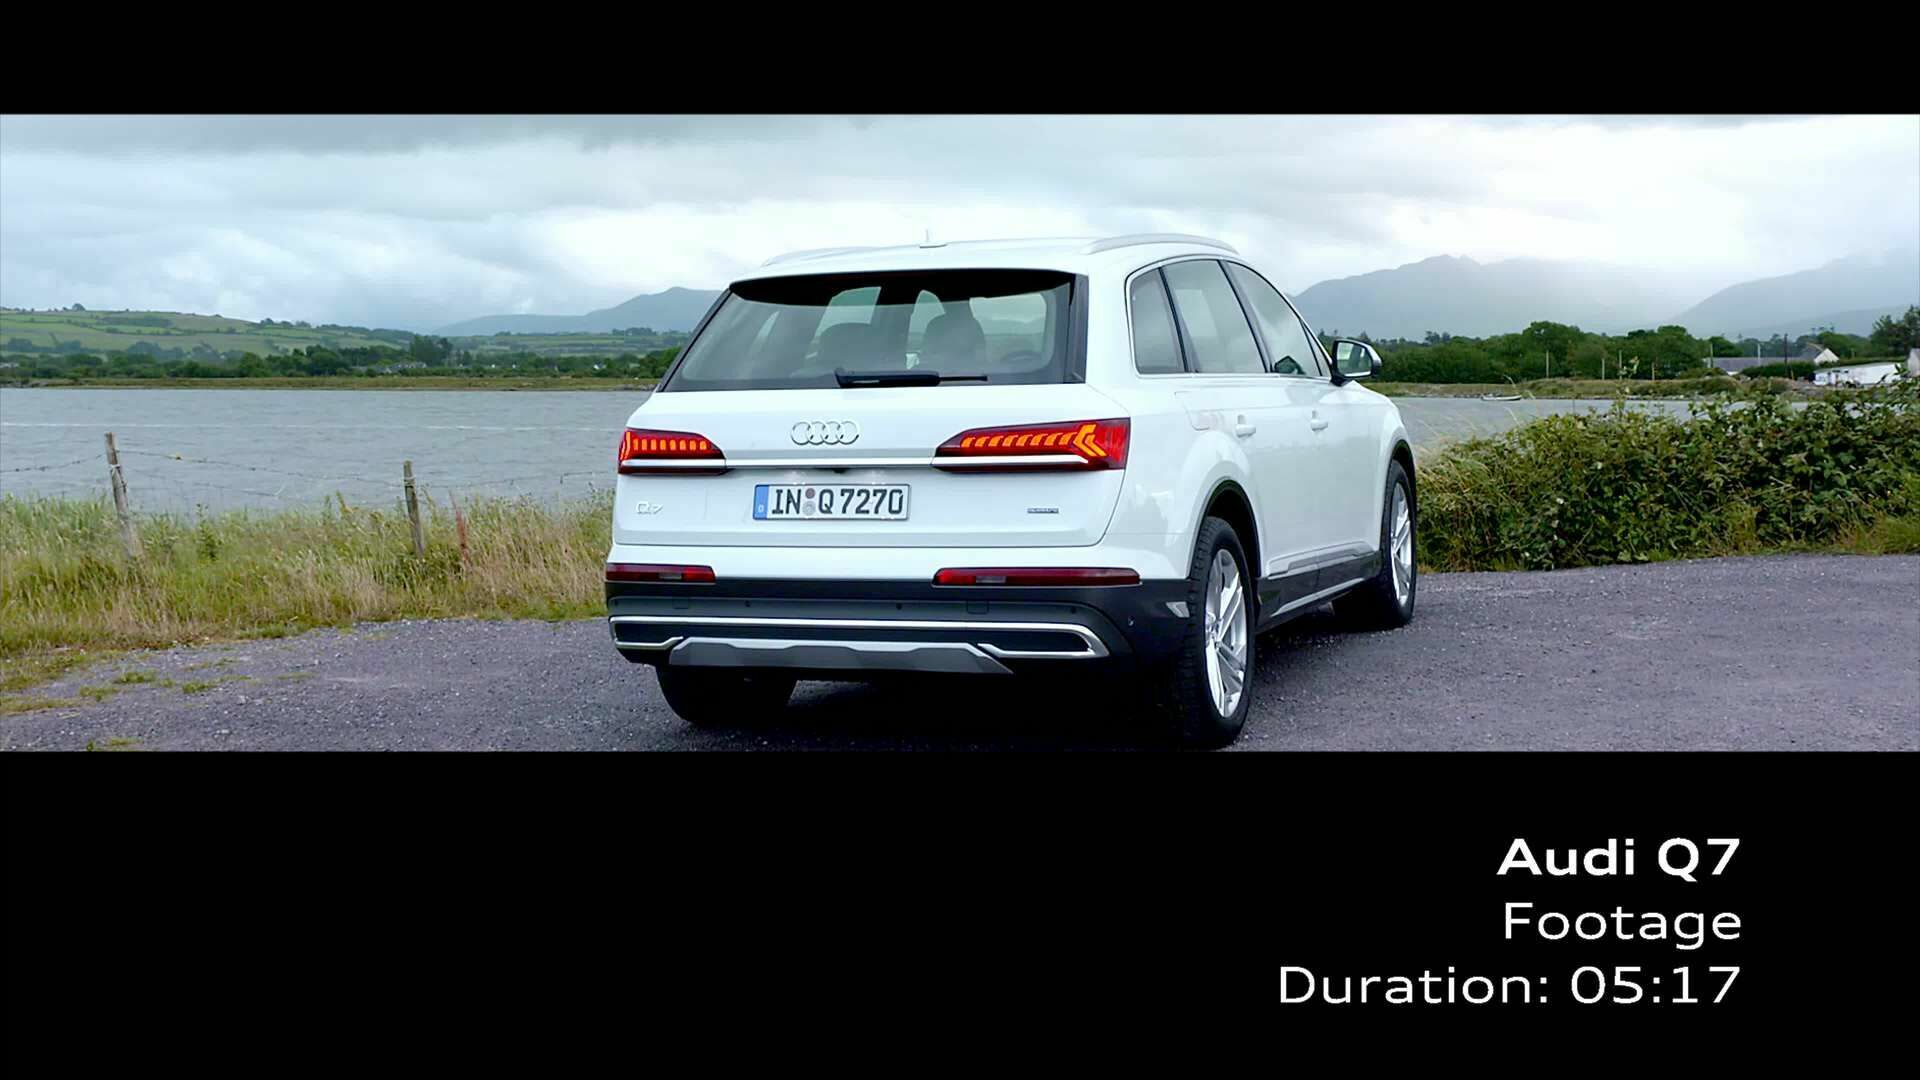 Audi Q7 glacier white (Footage)